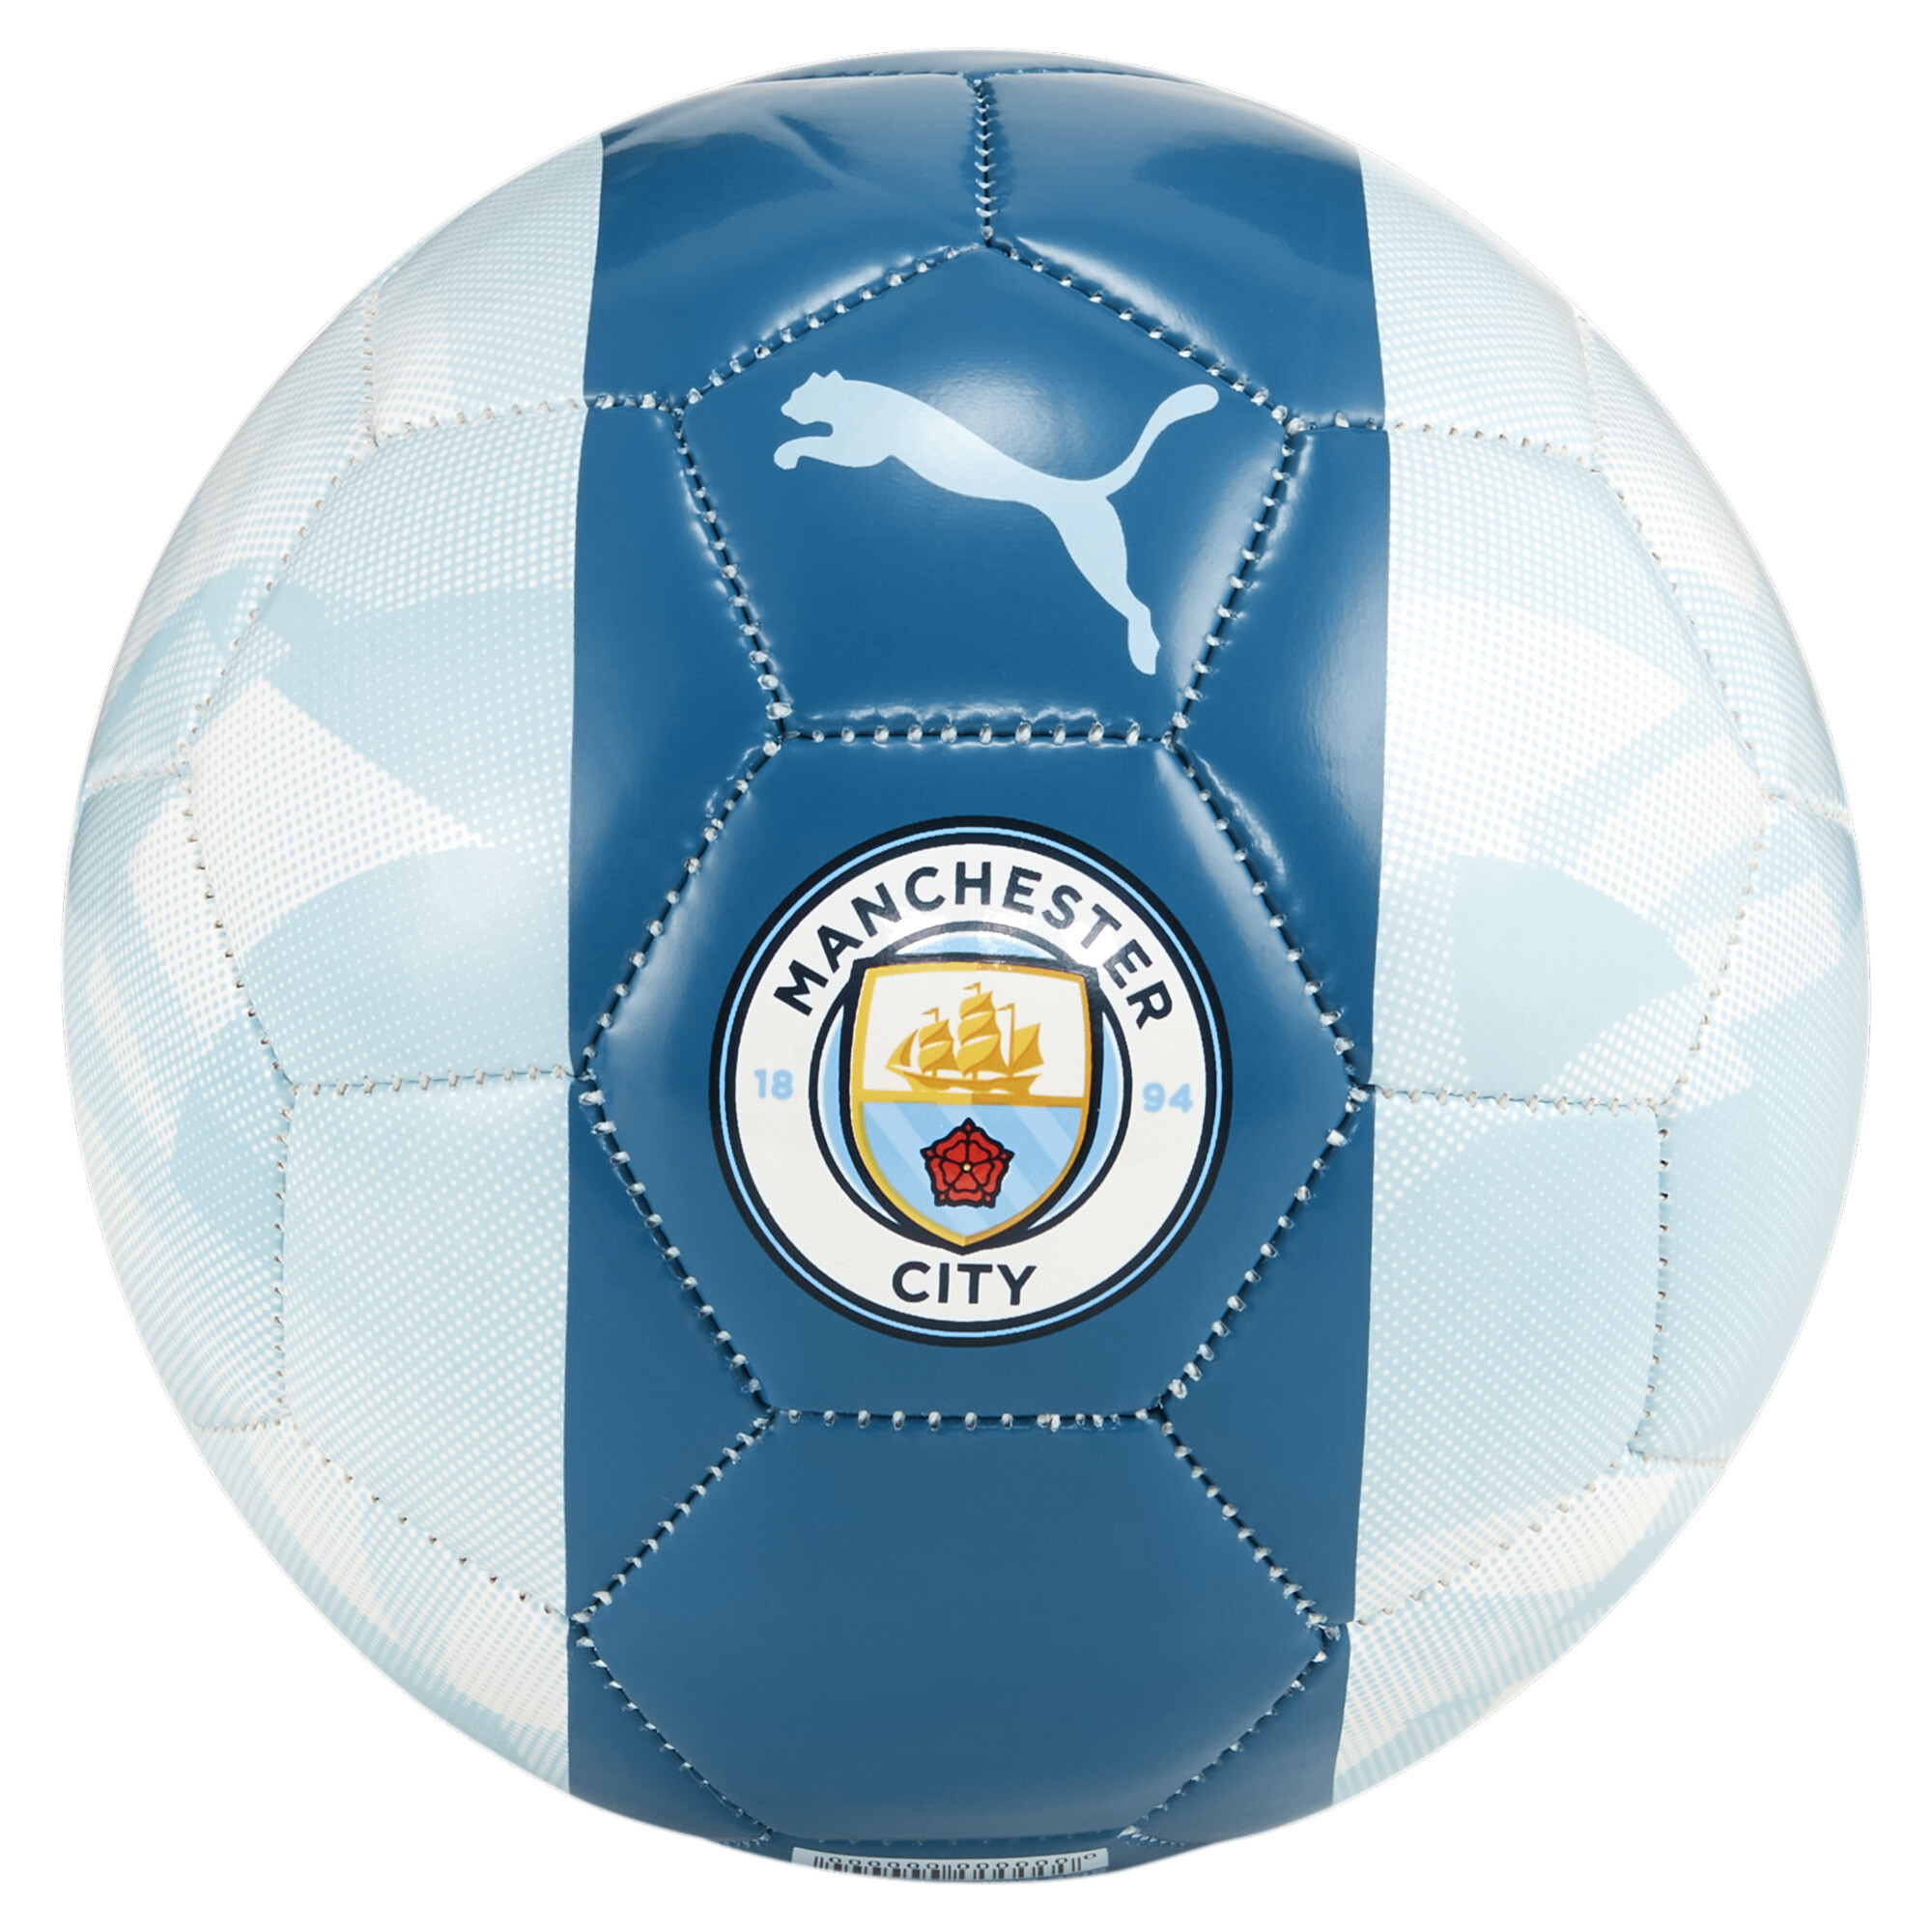 كرة قدم Manchester City FtblCore Mini أزرق